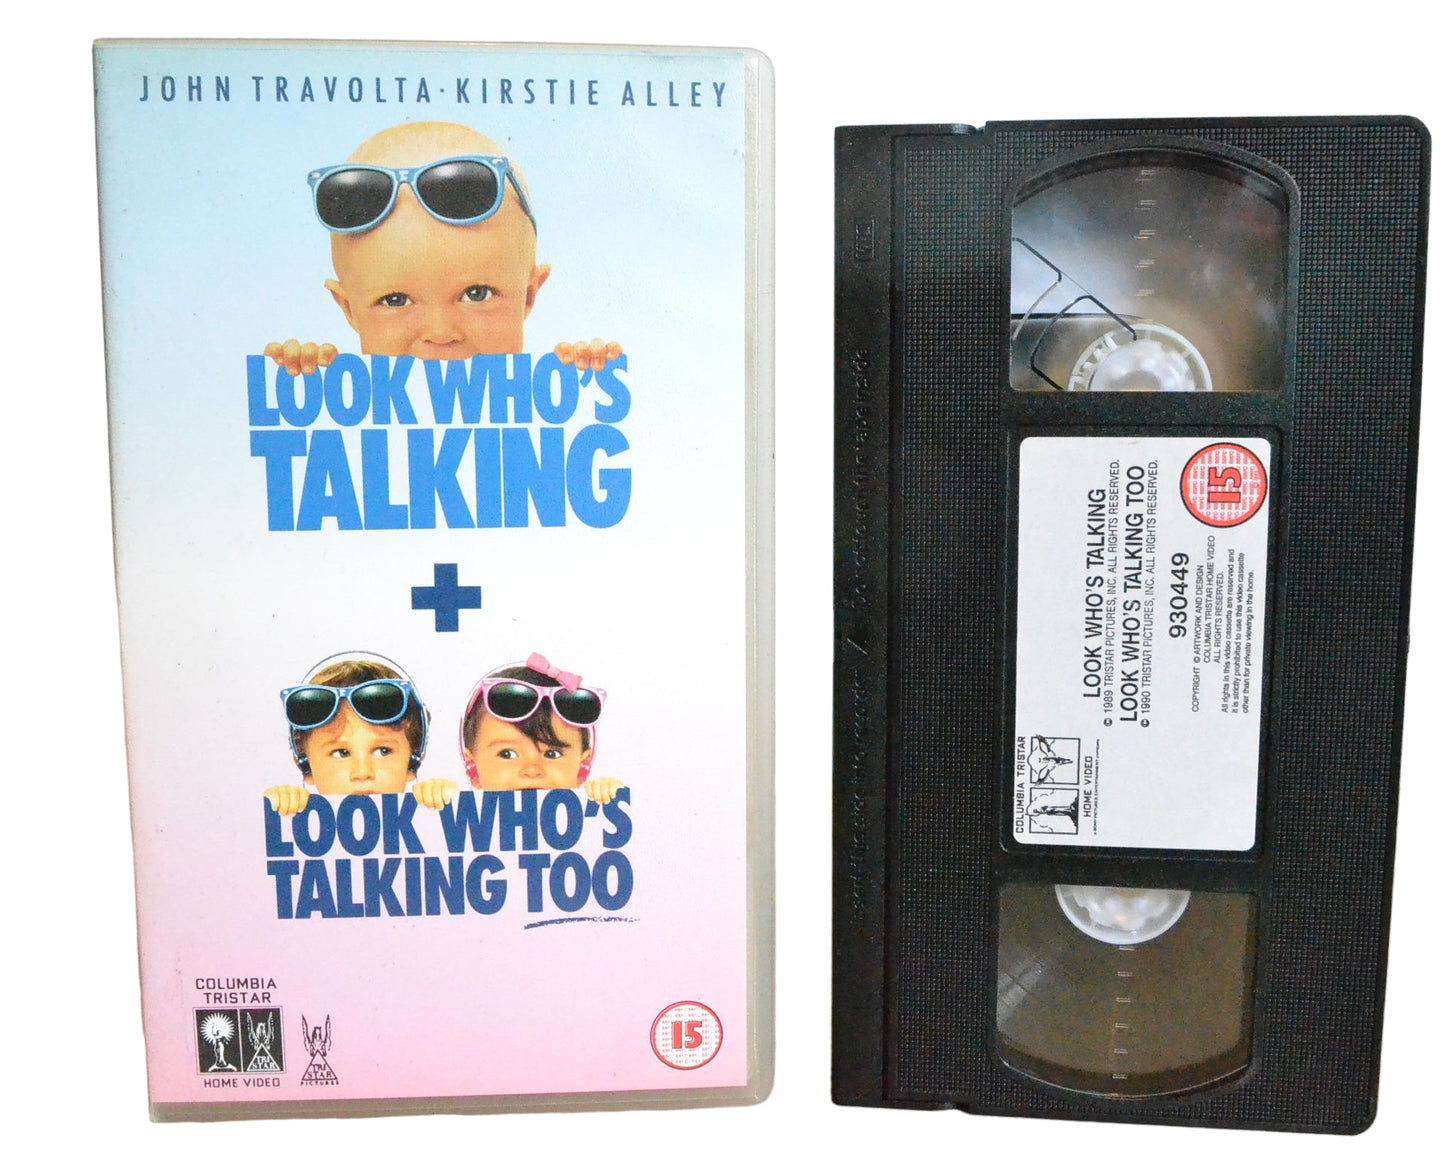 Look Who's Talking + Look Who's Talking Too - John Travolta - Columbia Tristar Home Video - CVRP6 - Comedy - Pal - VHS-